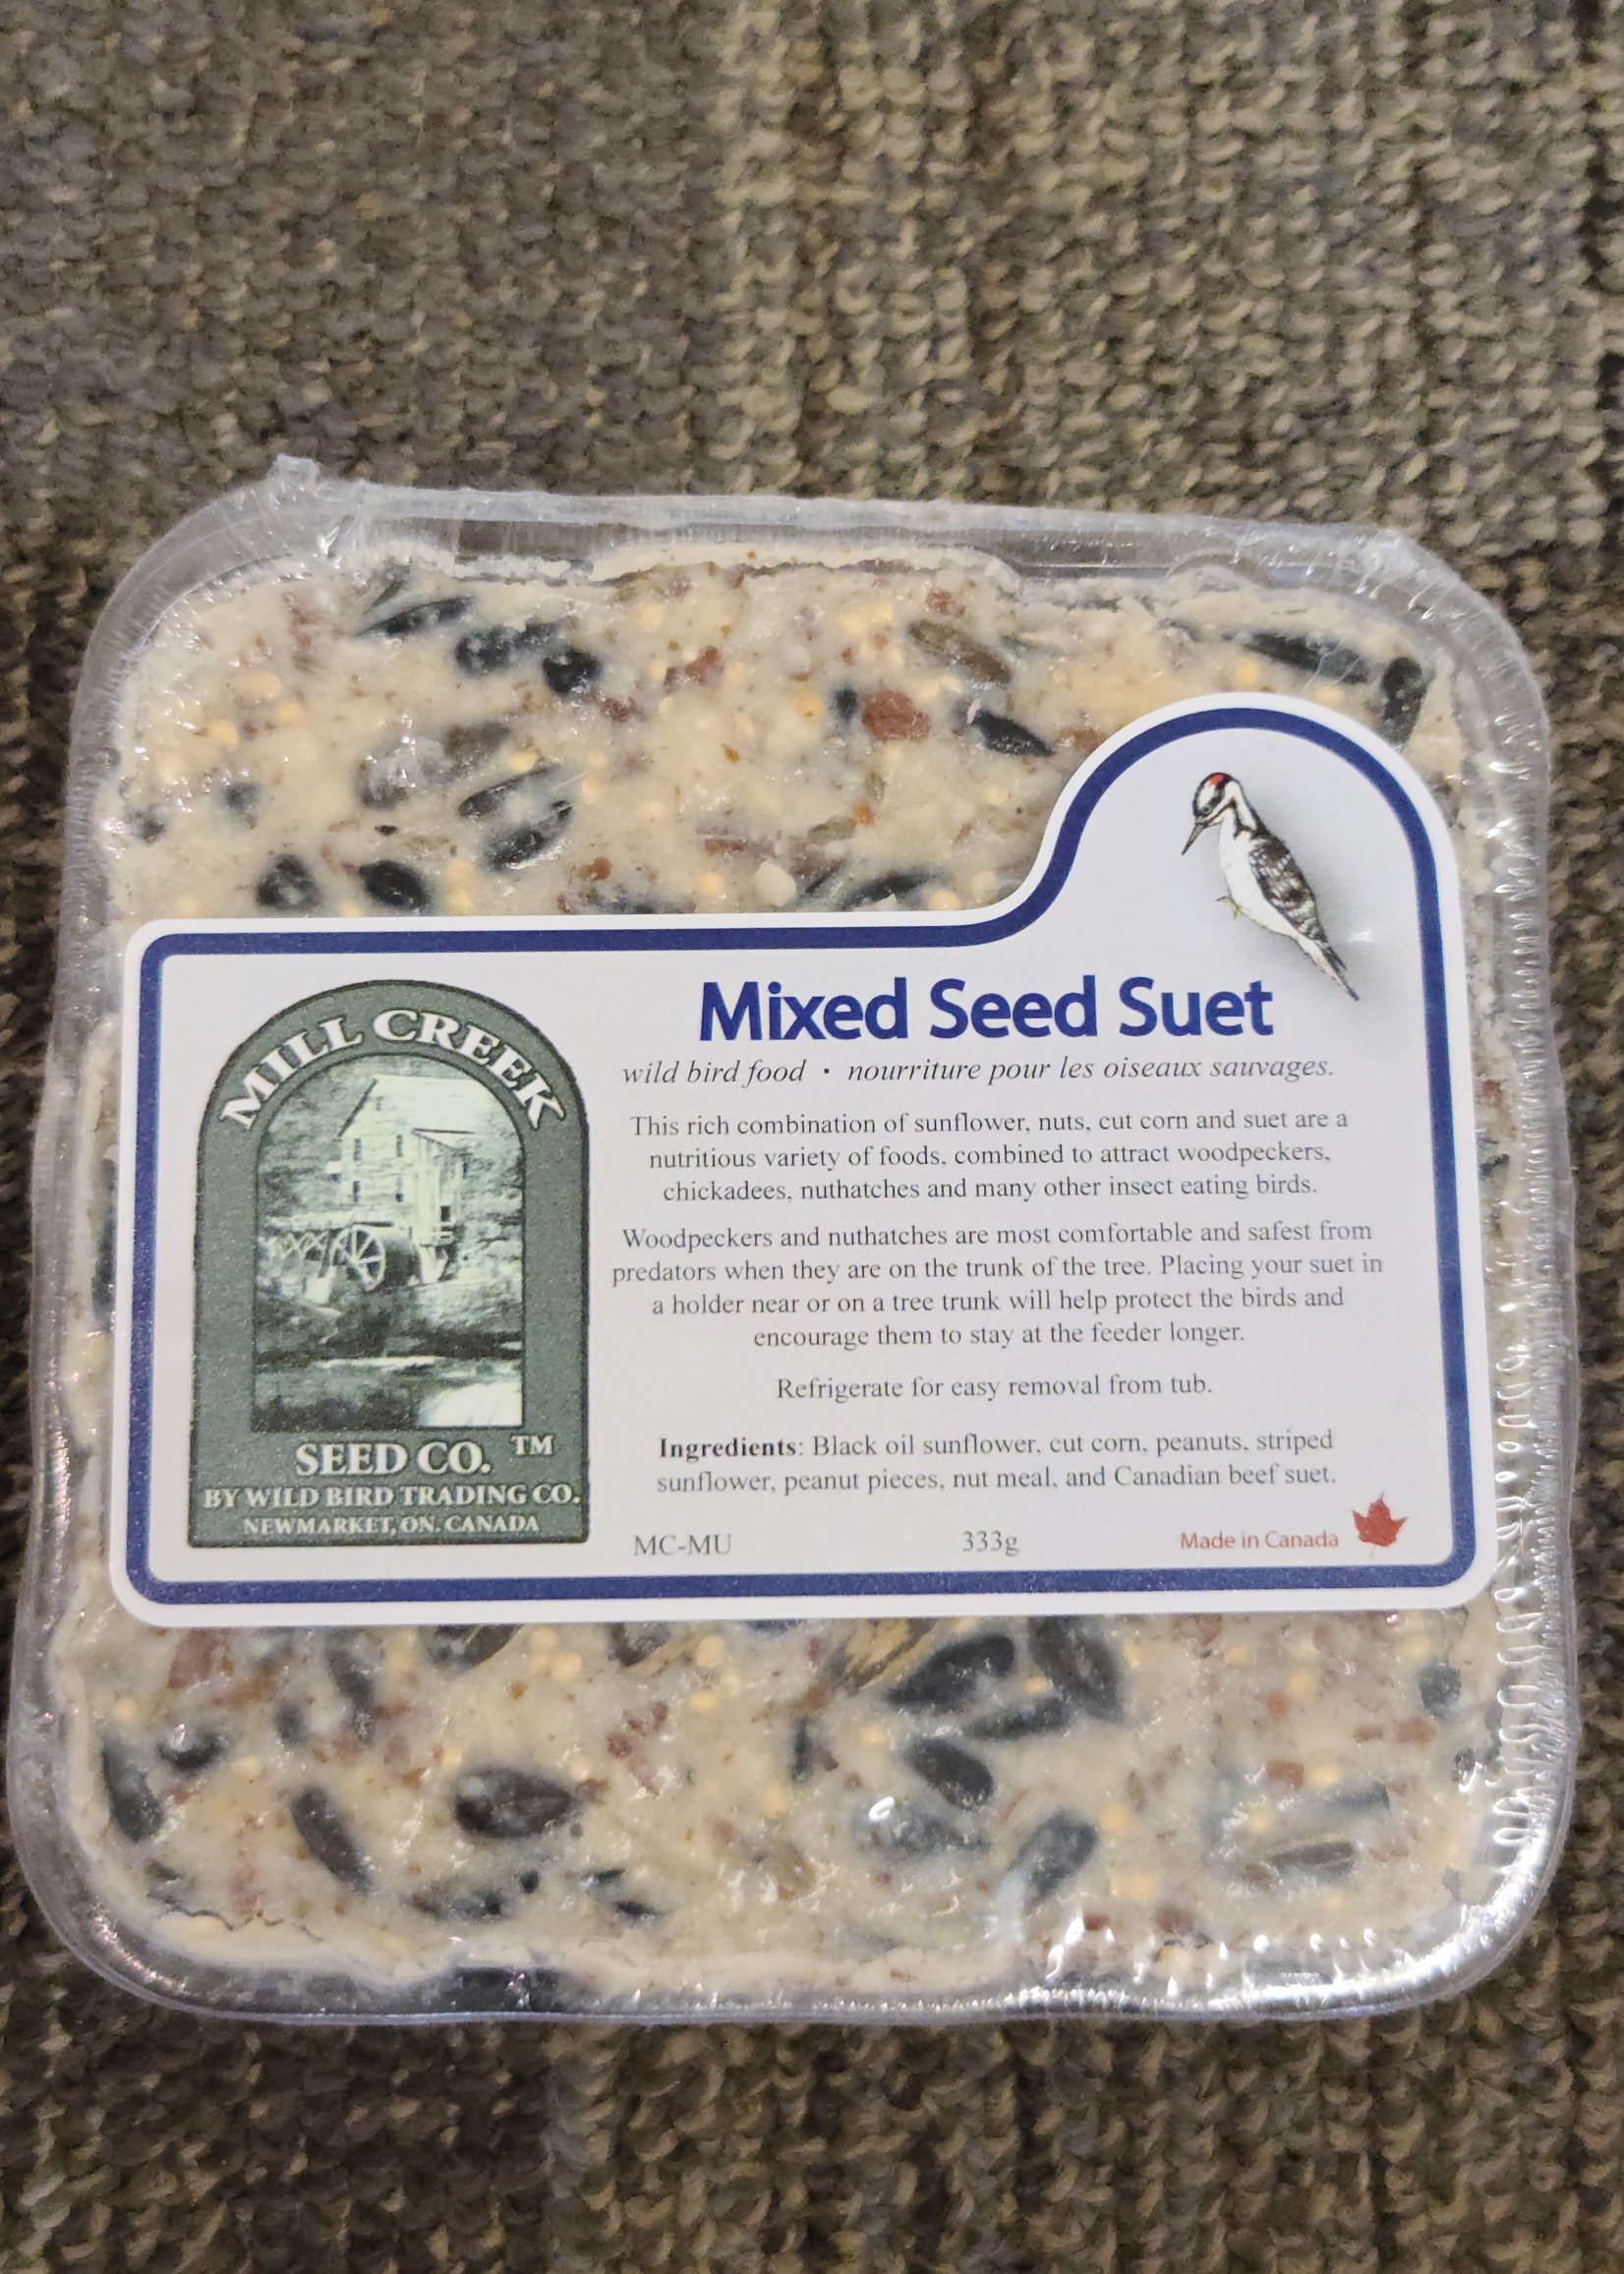 Mill Creek Mixed Seed Suet